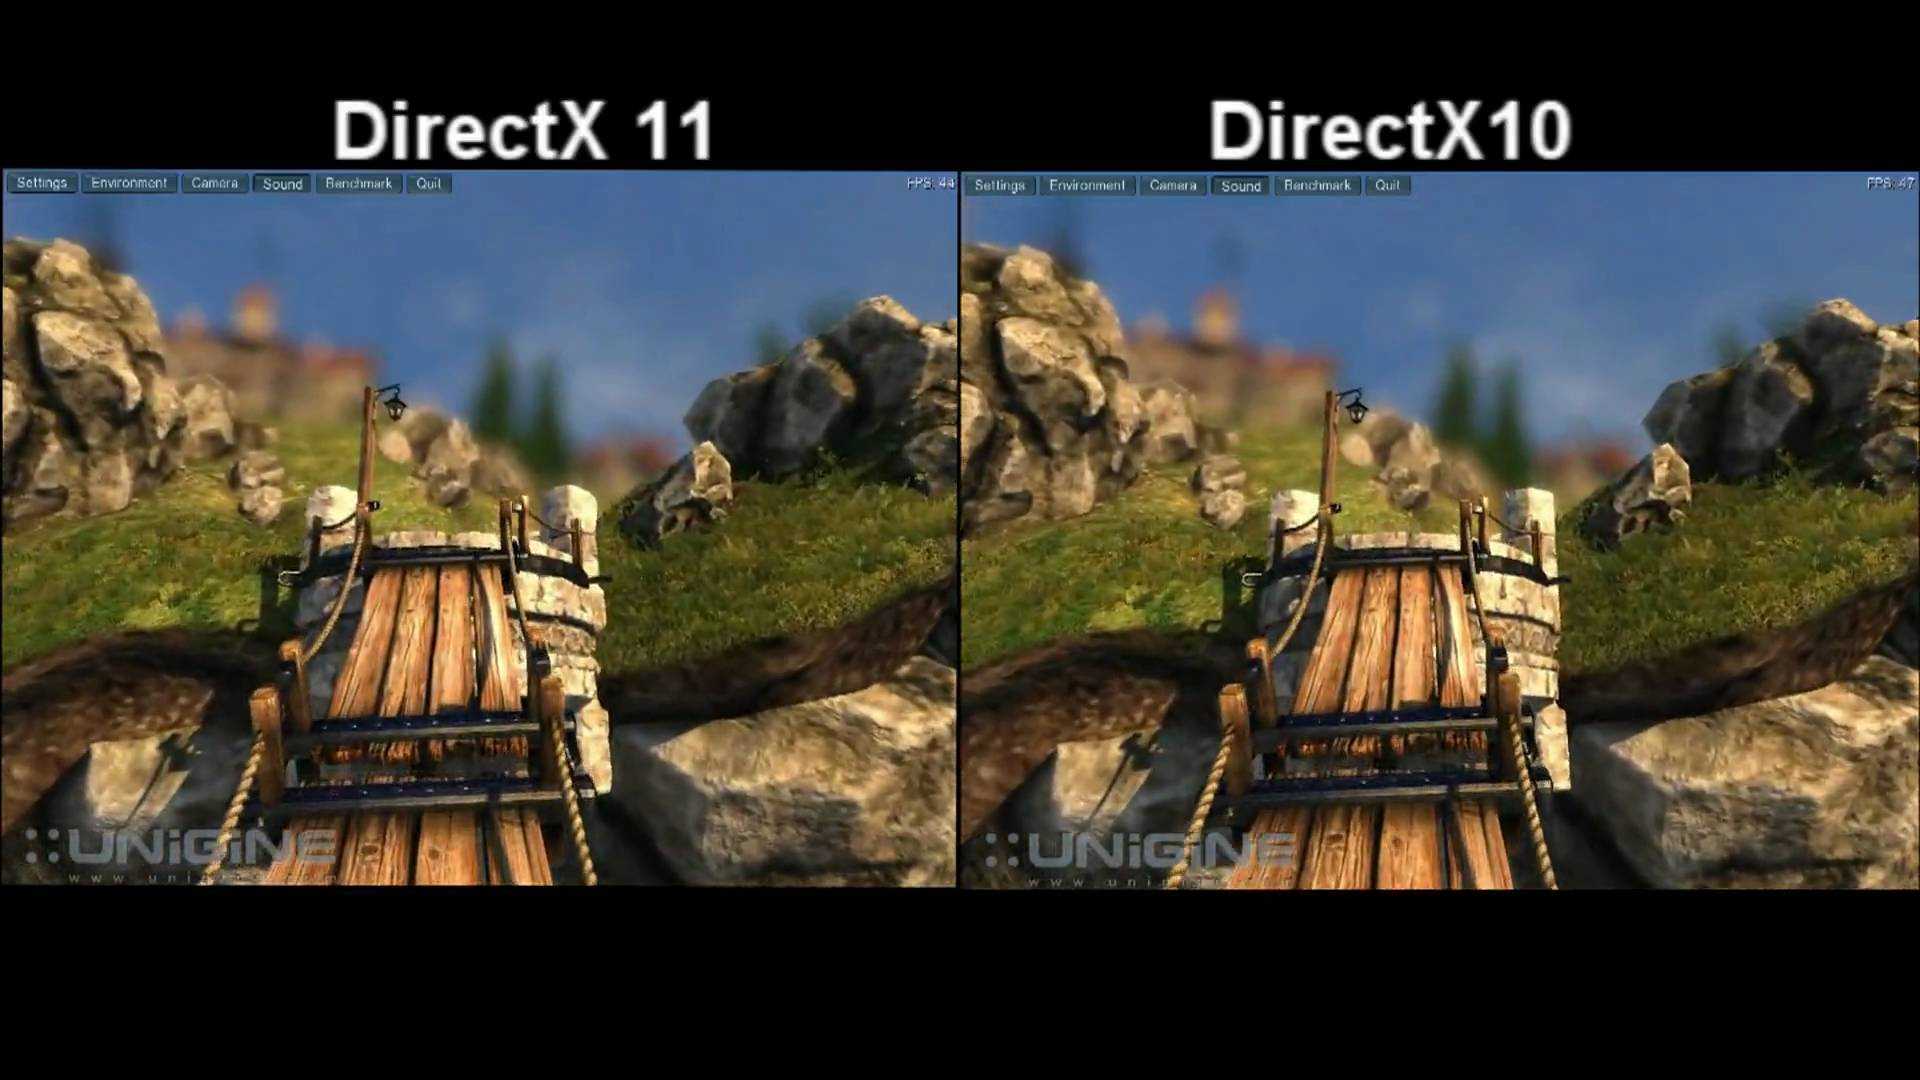 Directx 9